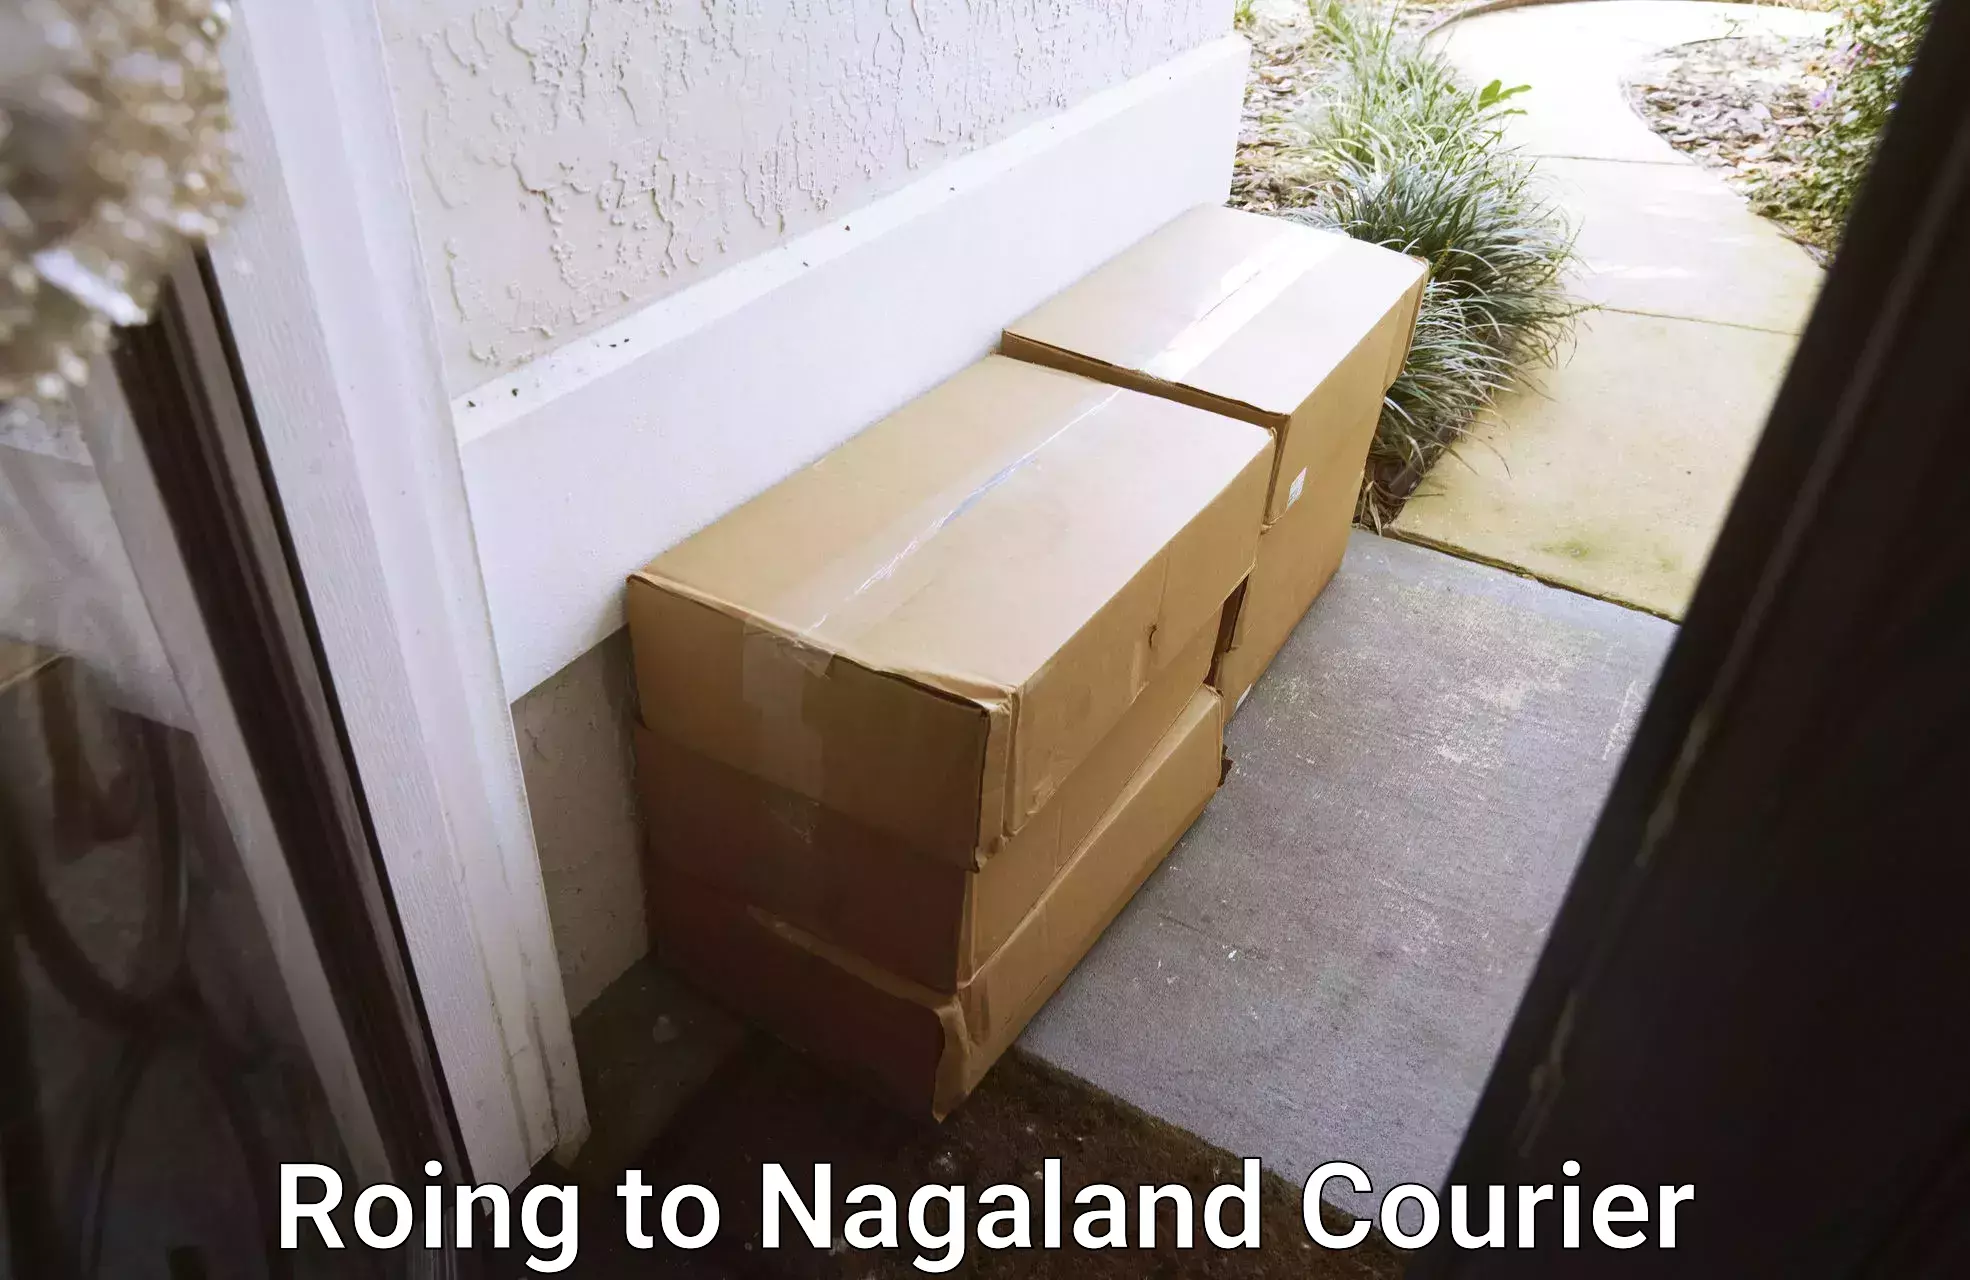 Advanced logistics management Roing to Nagaland